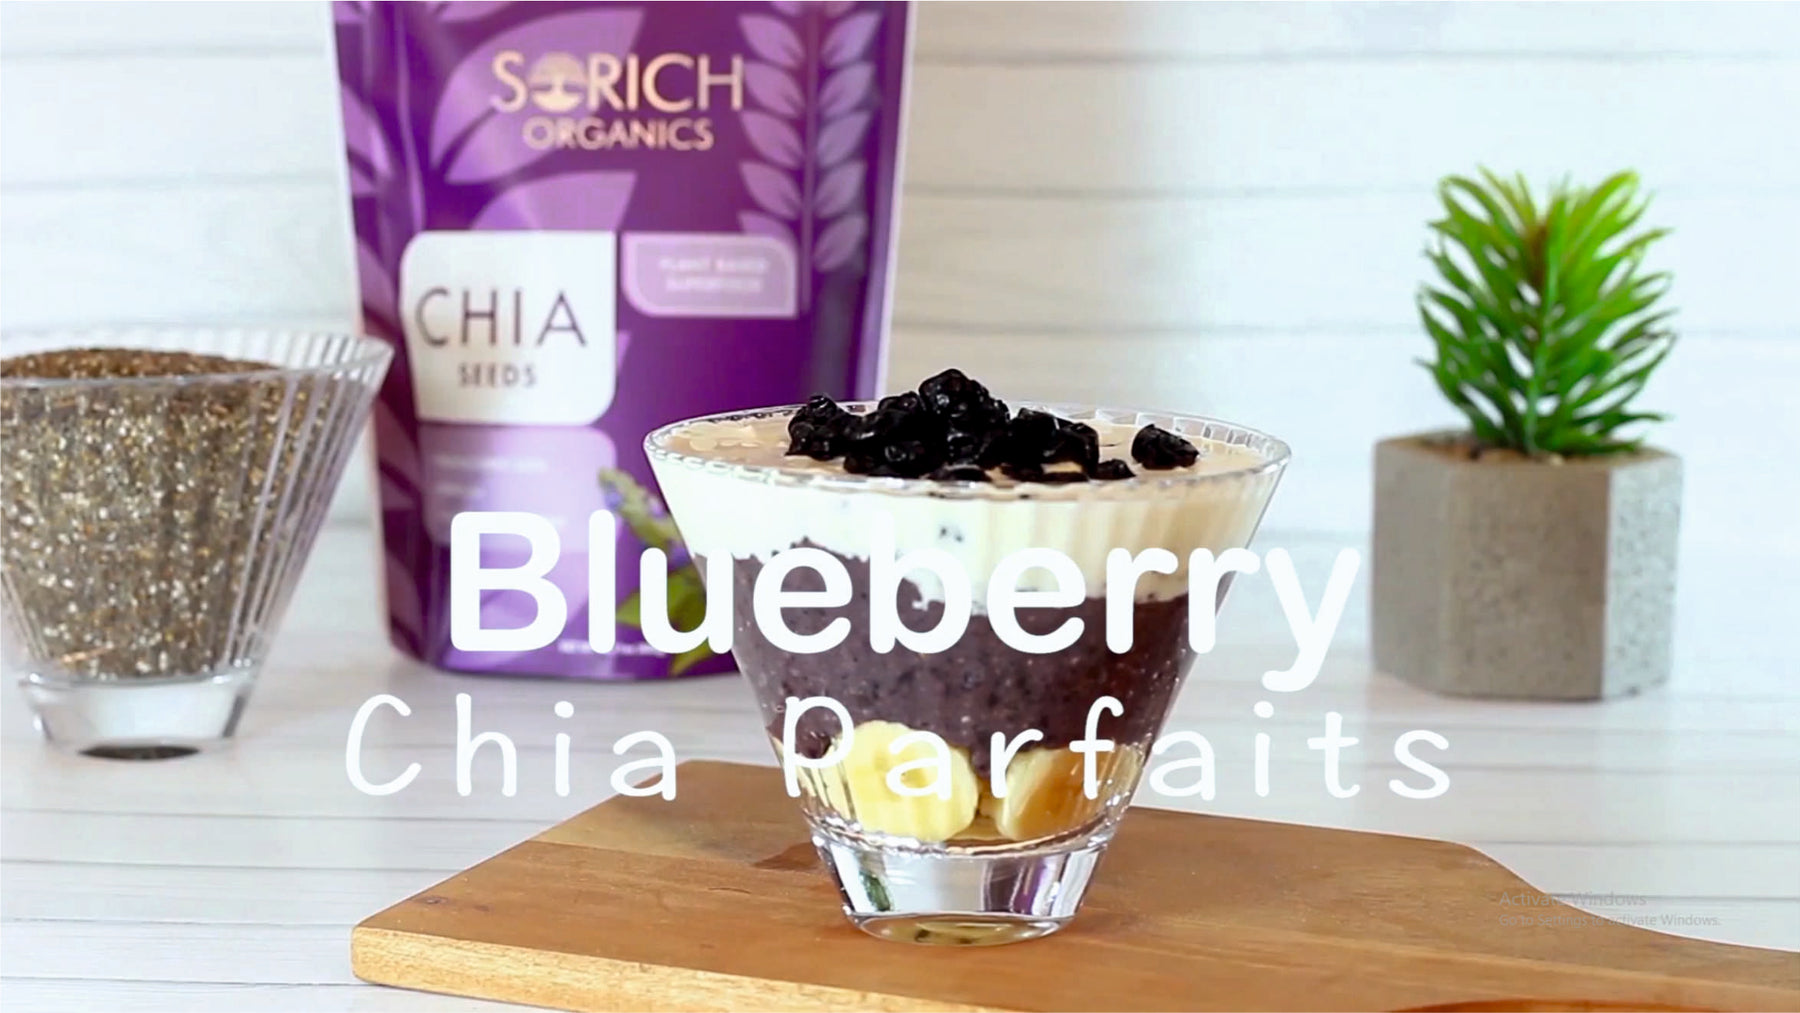 Blueberry Chia Parfaits - Sorichorganics